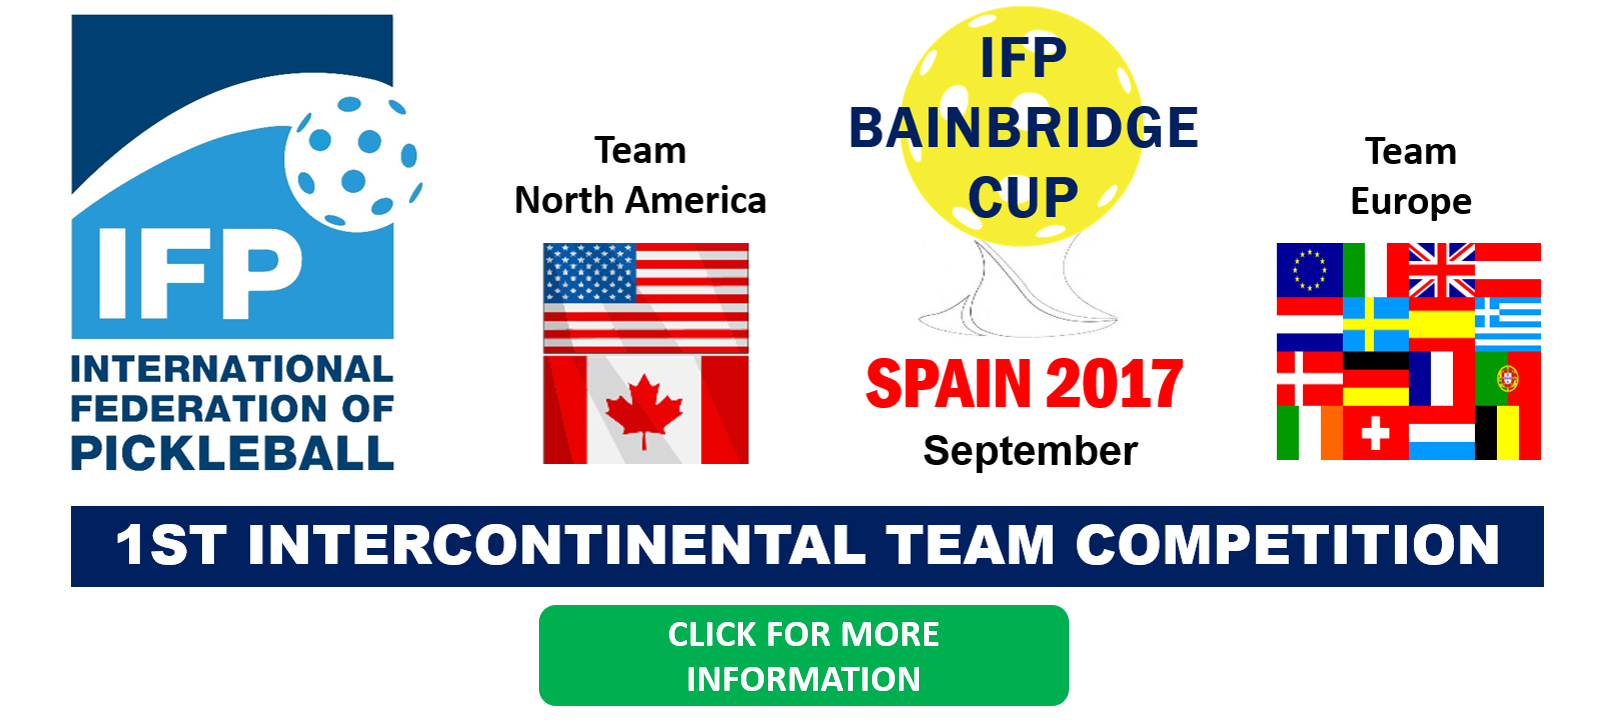 IFP Bainbridge Cup Logo - 2017 Spain